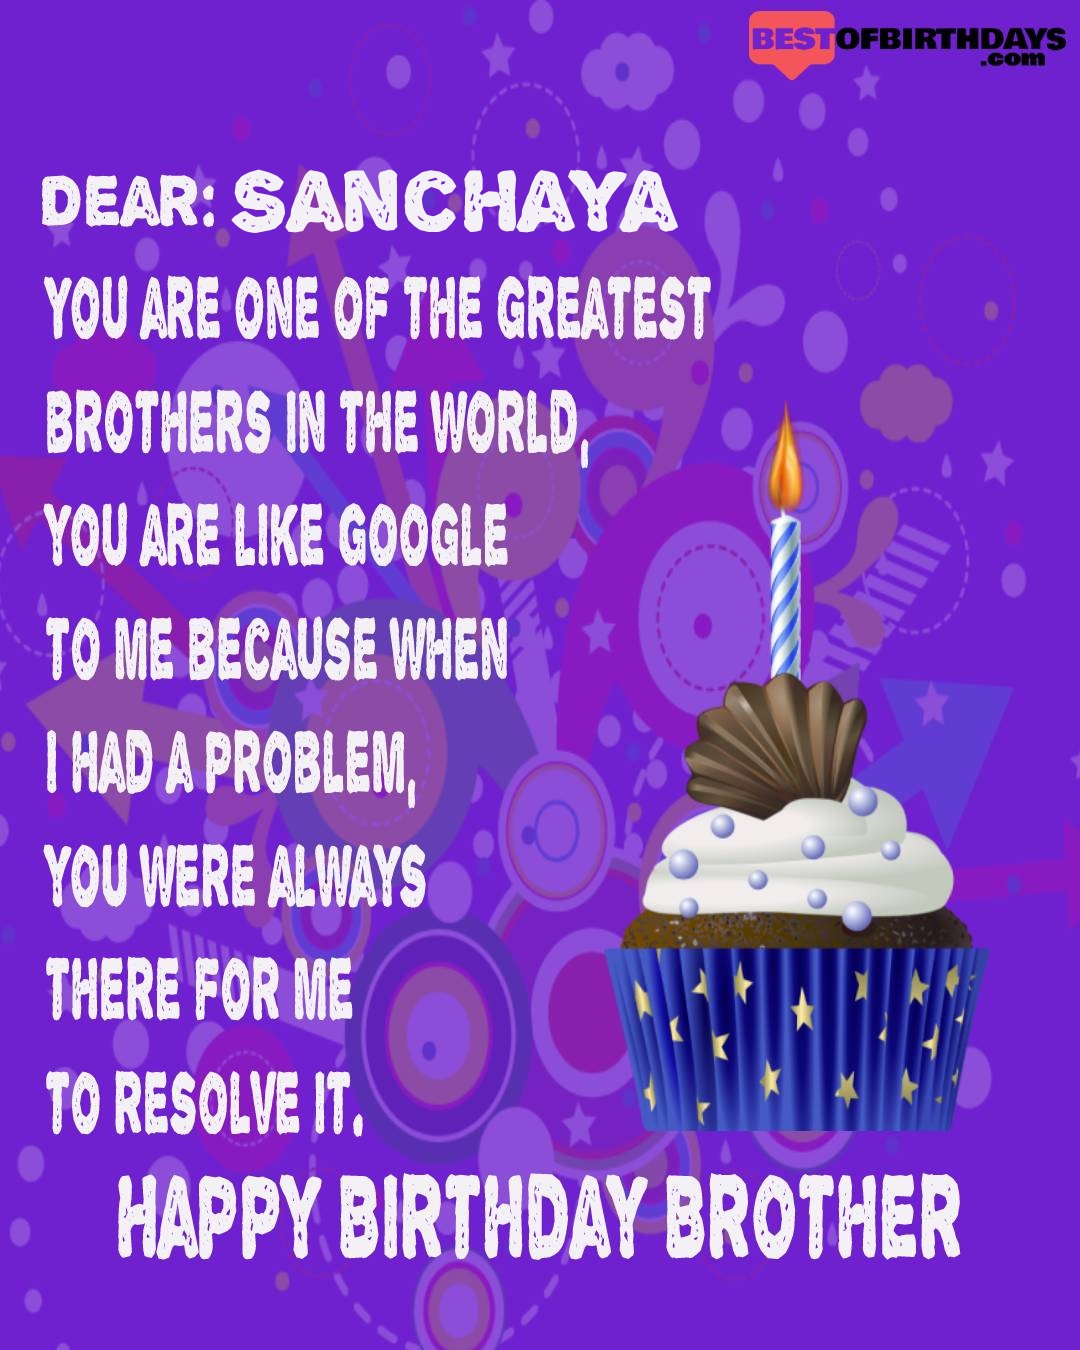 Happy birthday sanchaya bhai brother bro